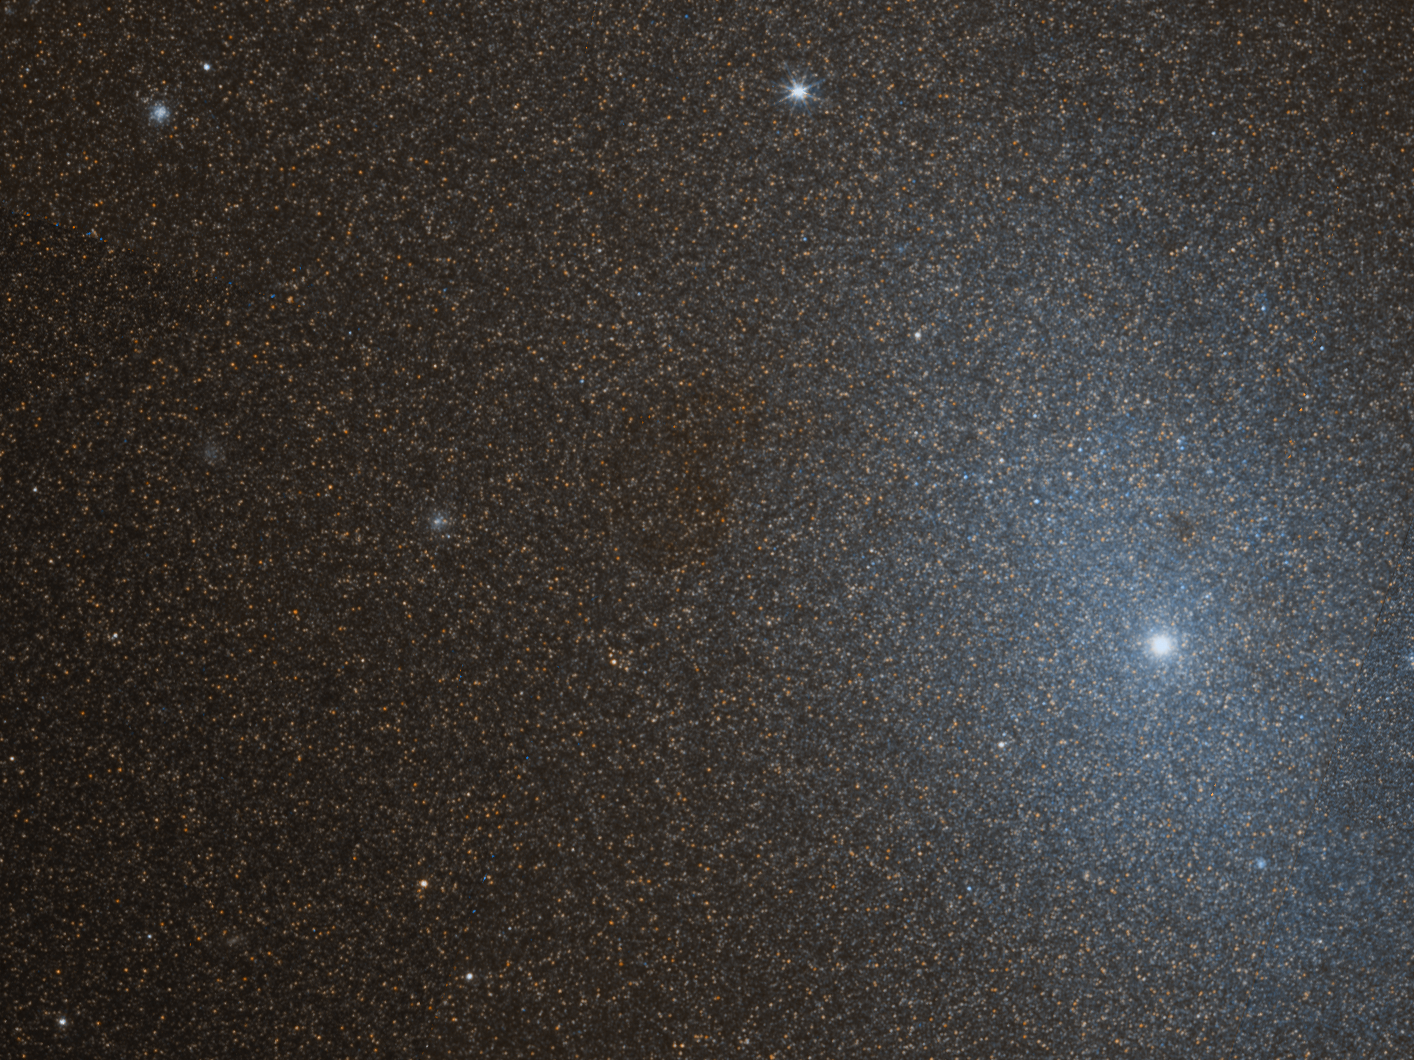 Hubble image of M110